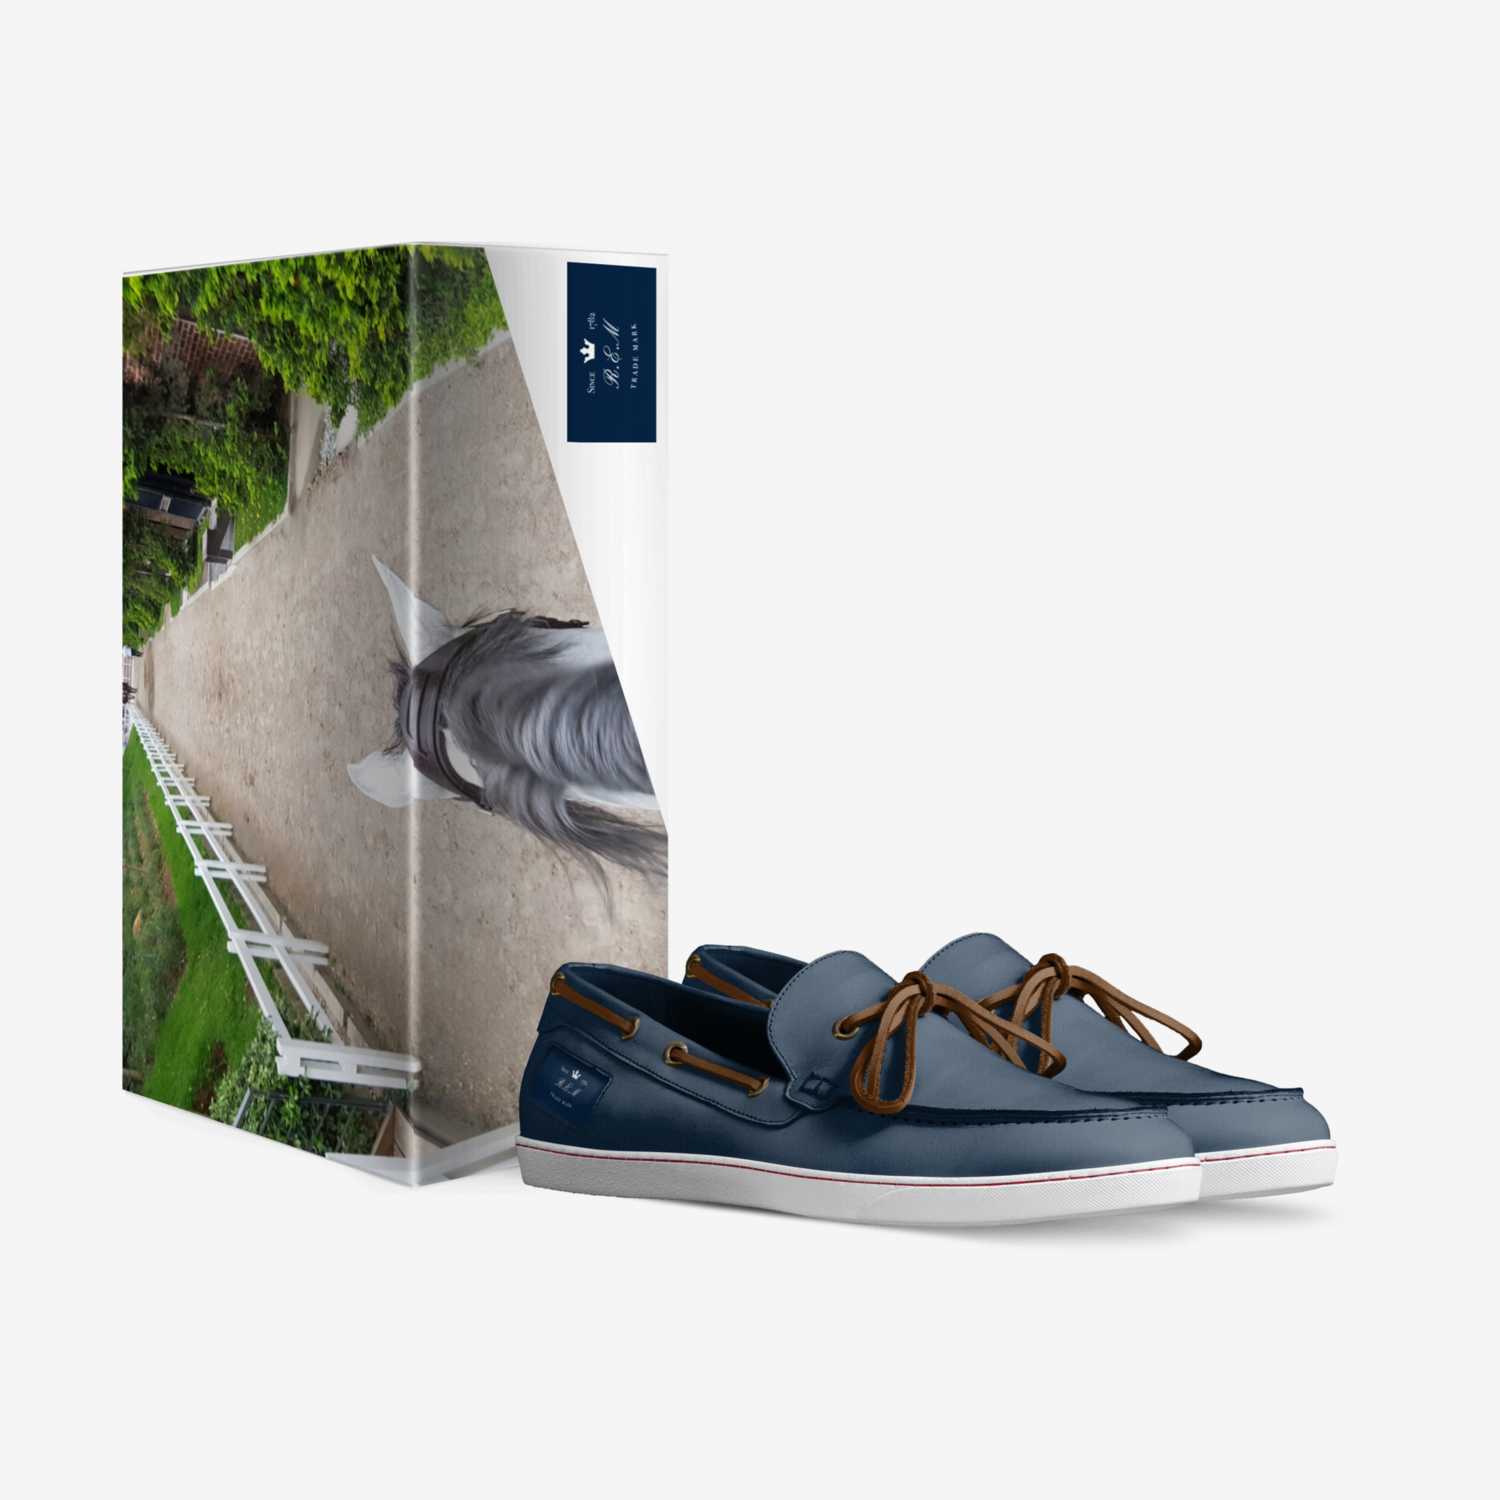 Slipperd custom made in Italy shoes by Rodrigo Morales | Box view